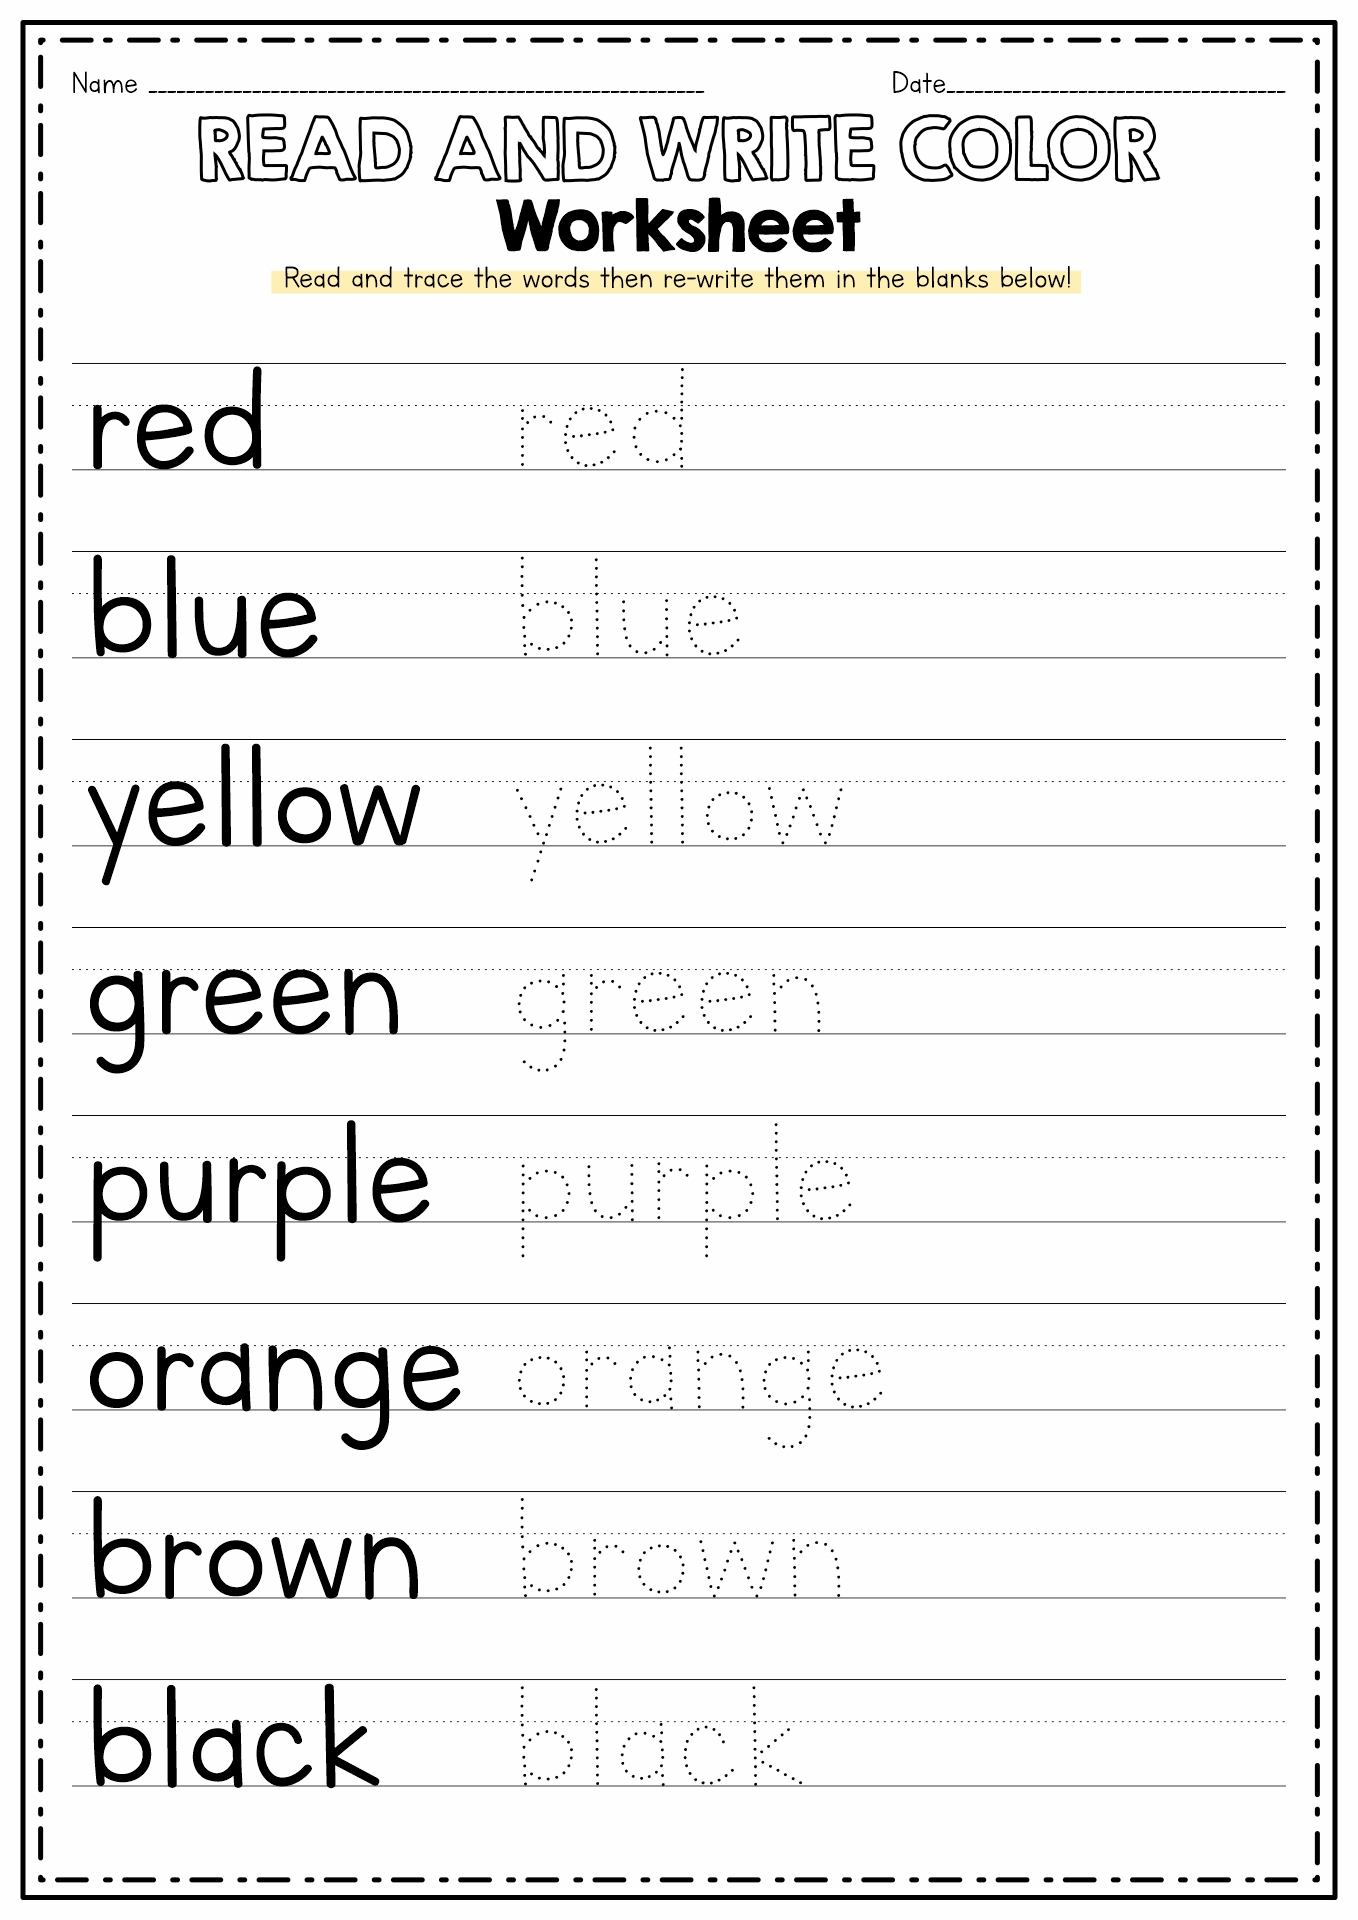 Practice Writing Color Words Worksheet Image